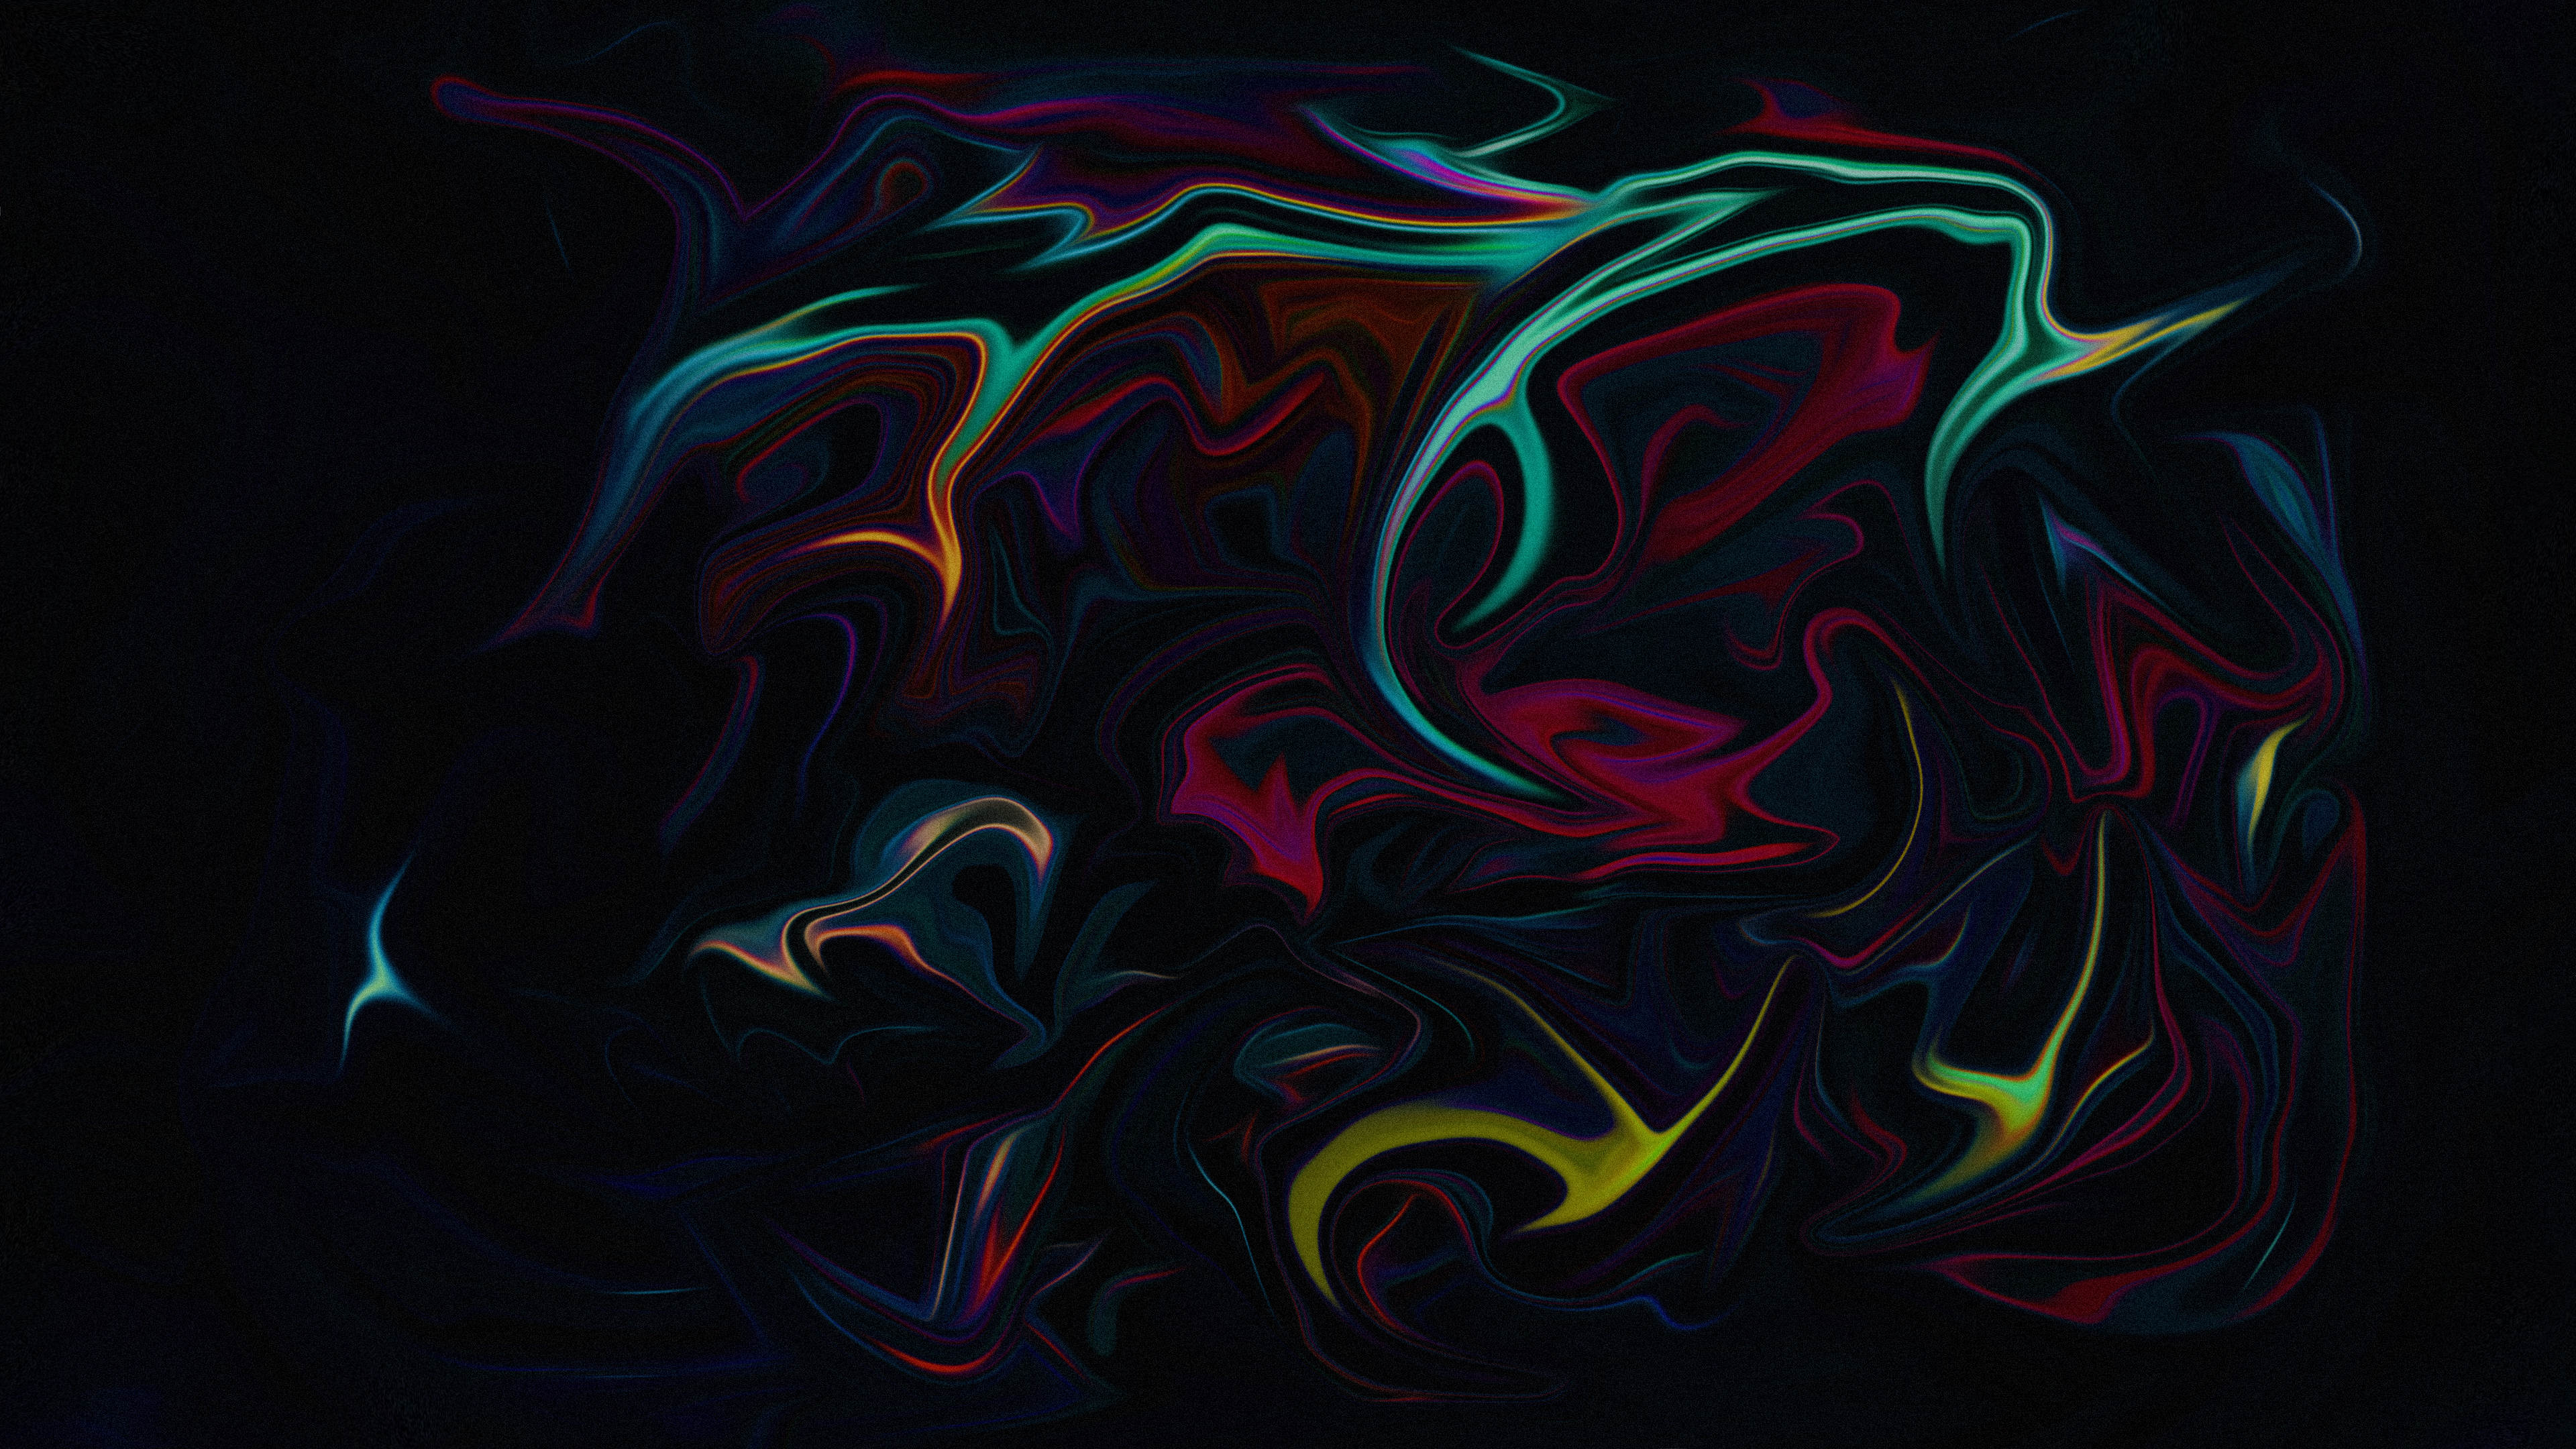 Abstract Fluid Liquid Dark Interference Black Colorful Digital Art Artwork 3840x2160